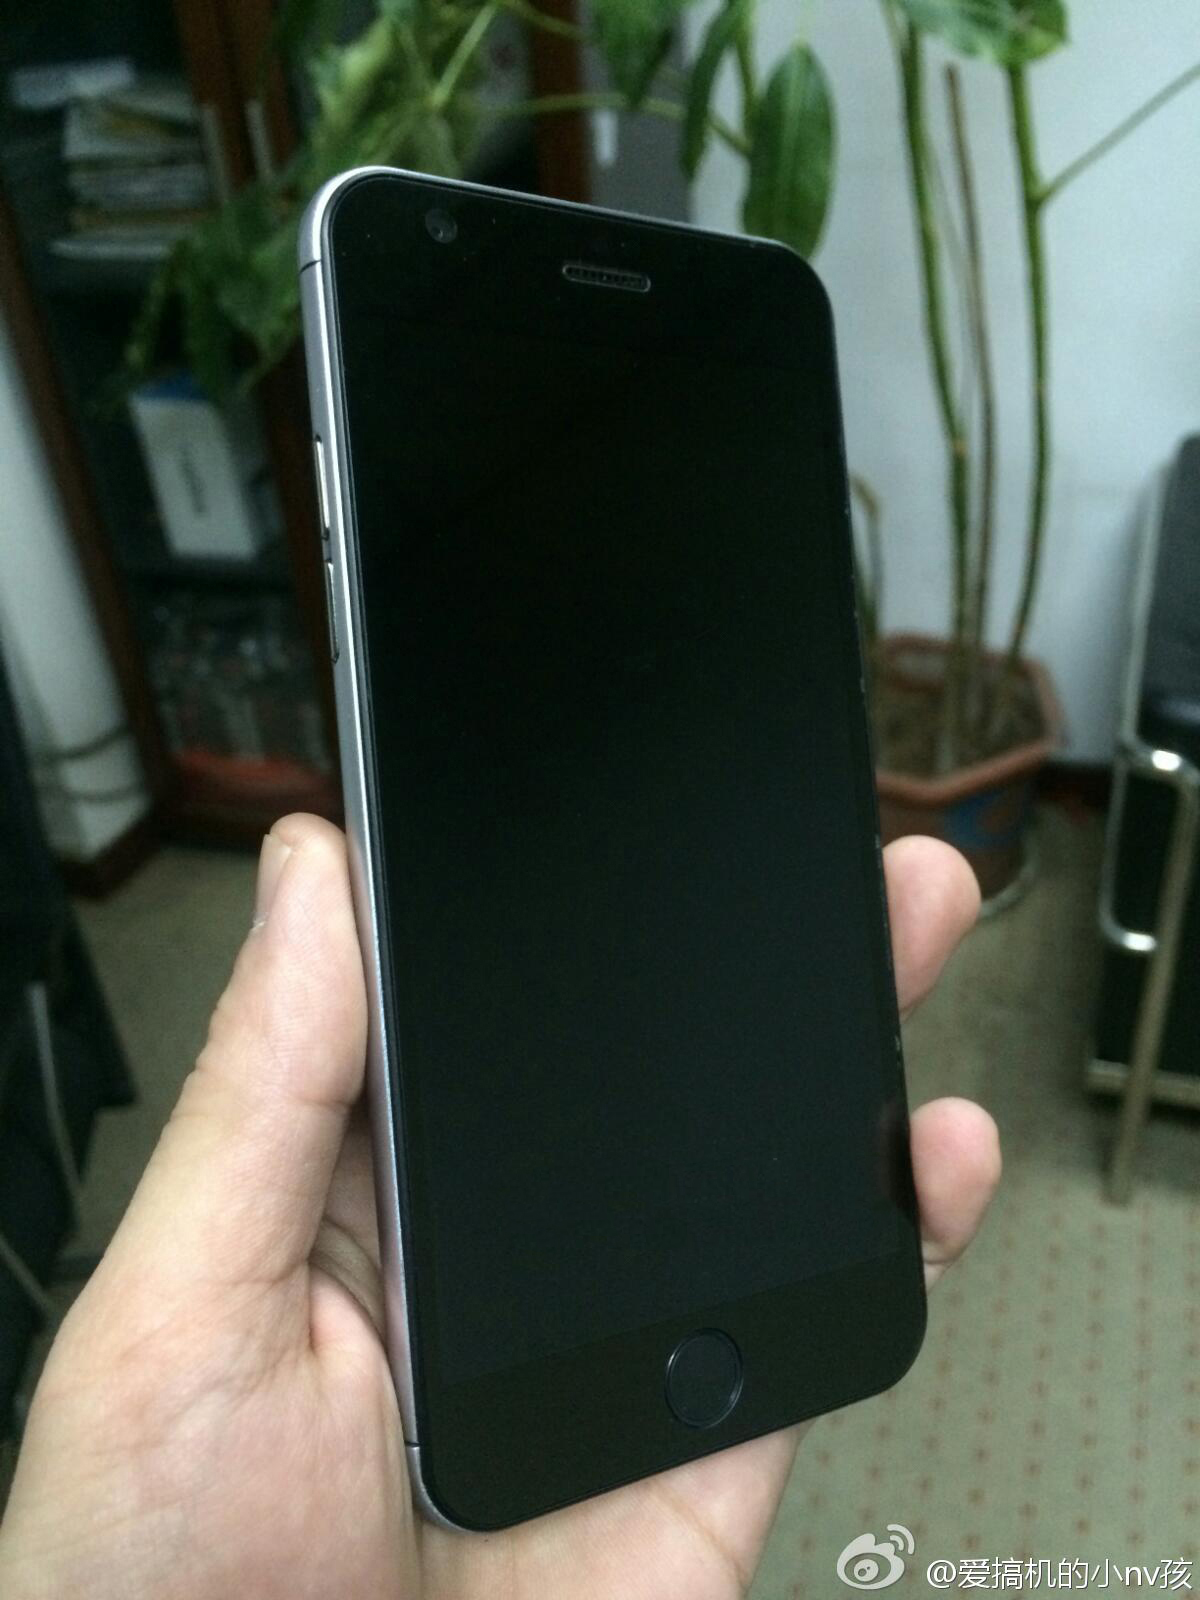 iPhone 6 clon 1